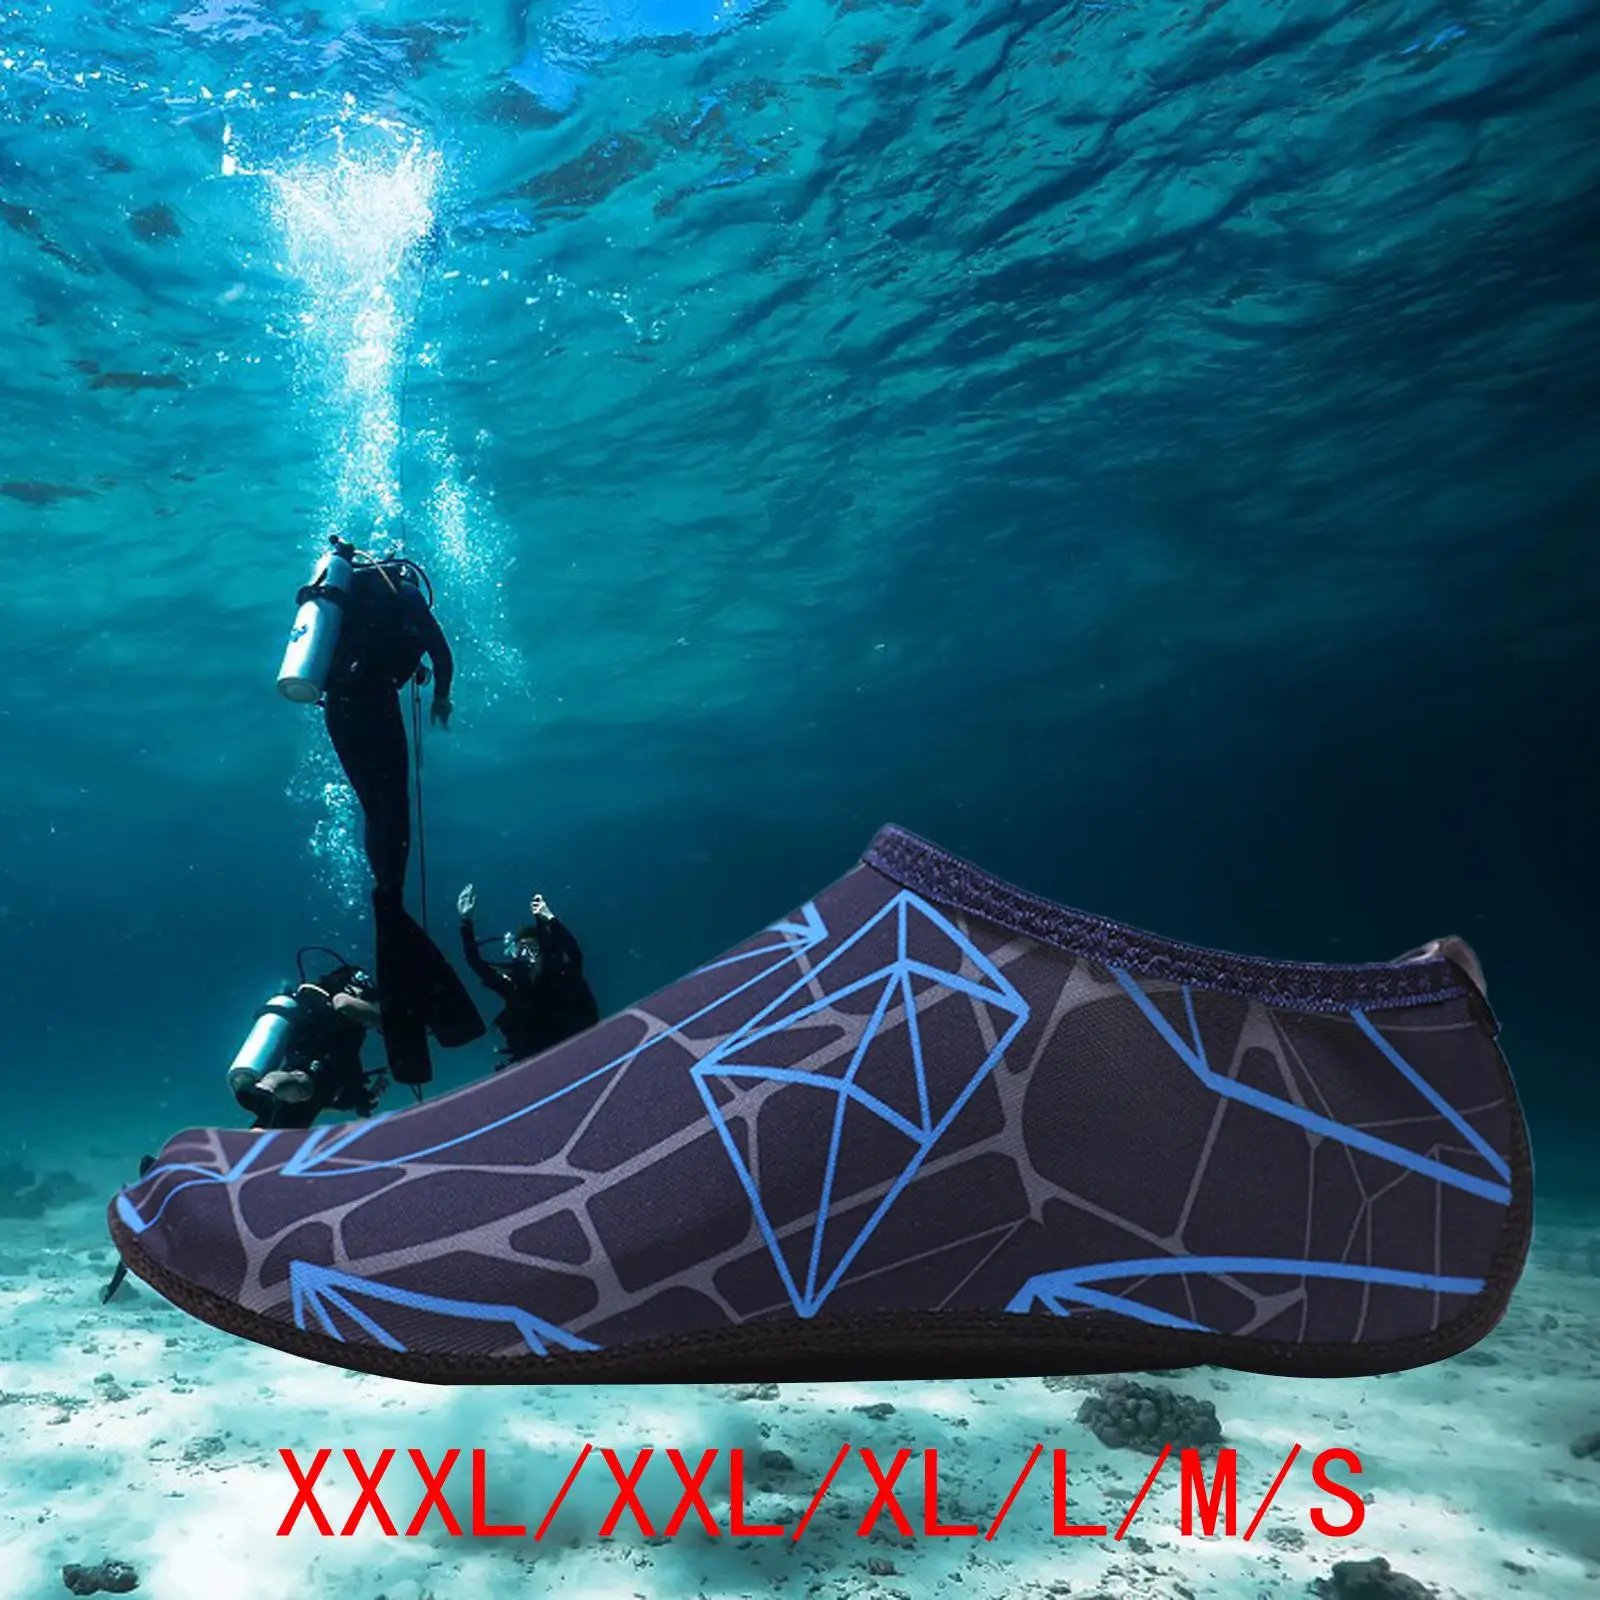 Unisex 3mm Neoprene Diving Wet Suit Boots Beach Swim Hiking Waterproof Socks Snorkeling Swimming Snorkel Shoes Wetsuit Socks